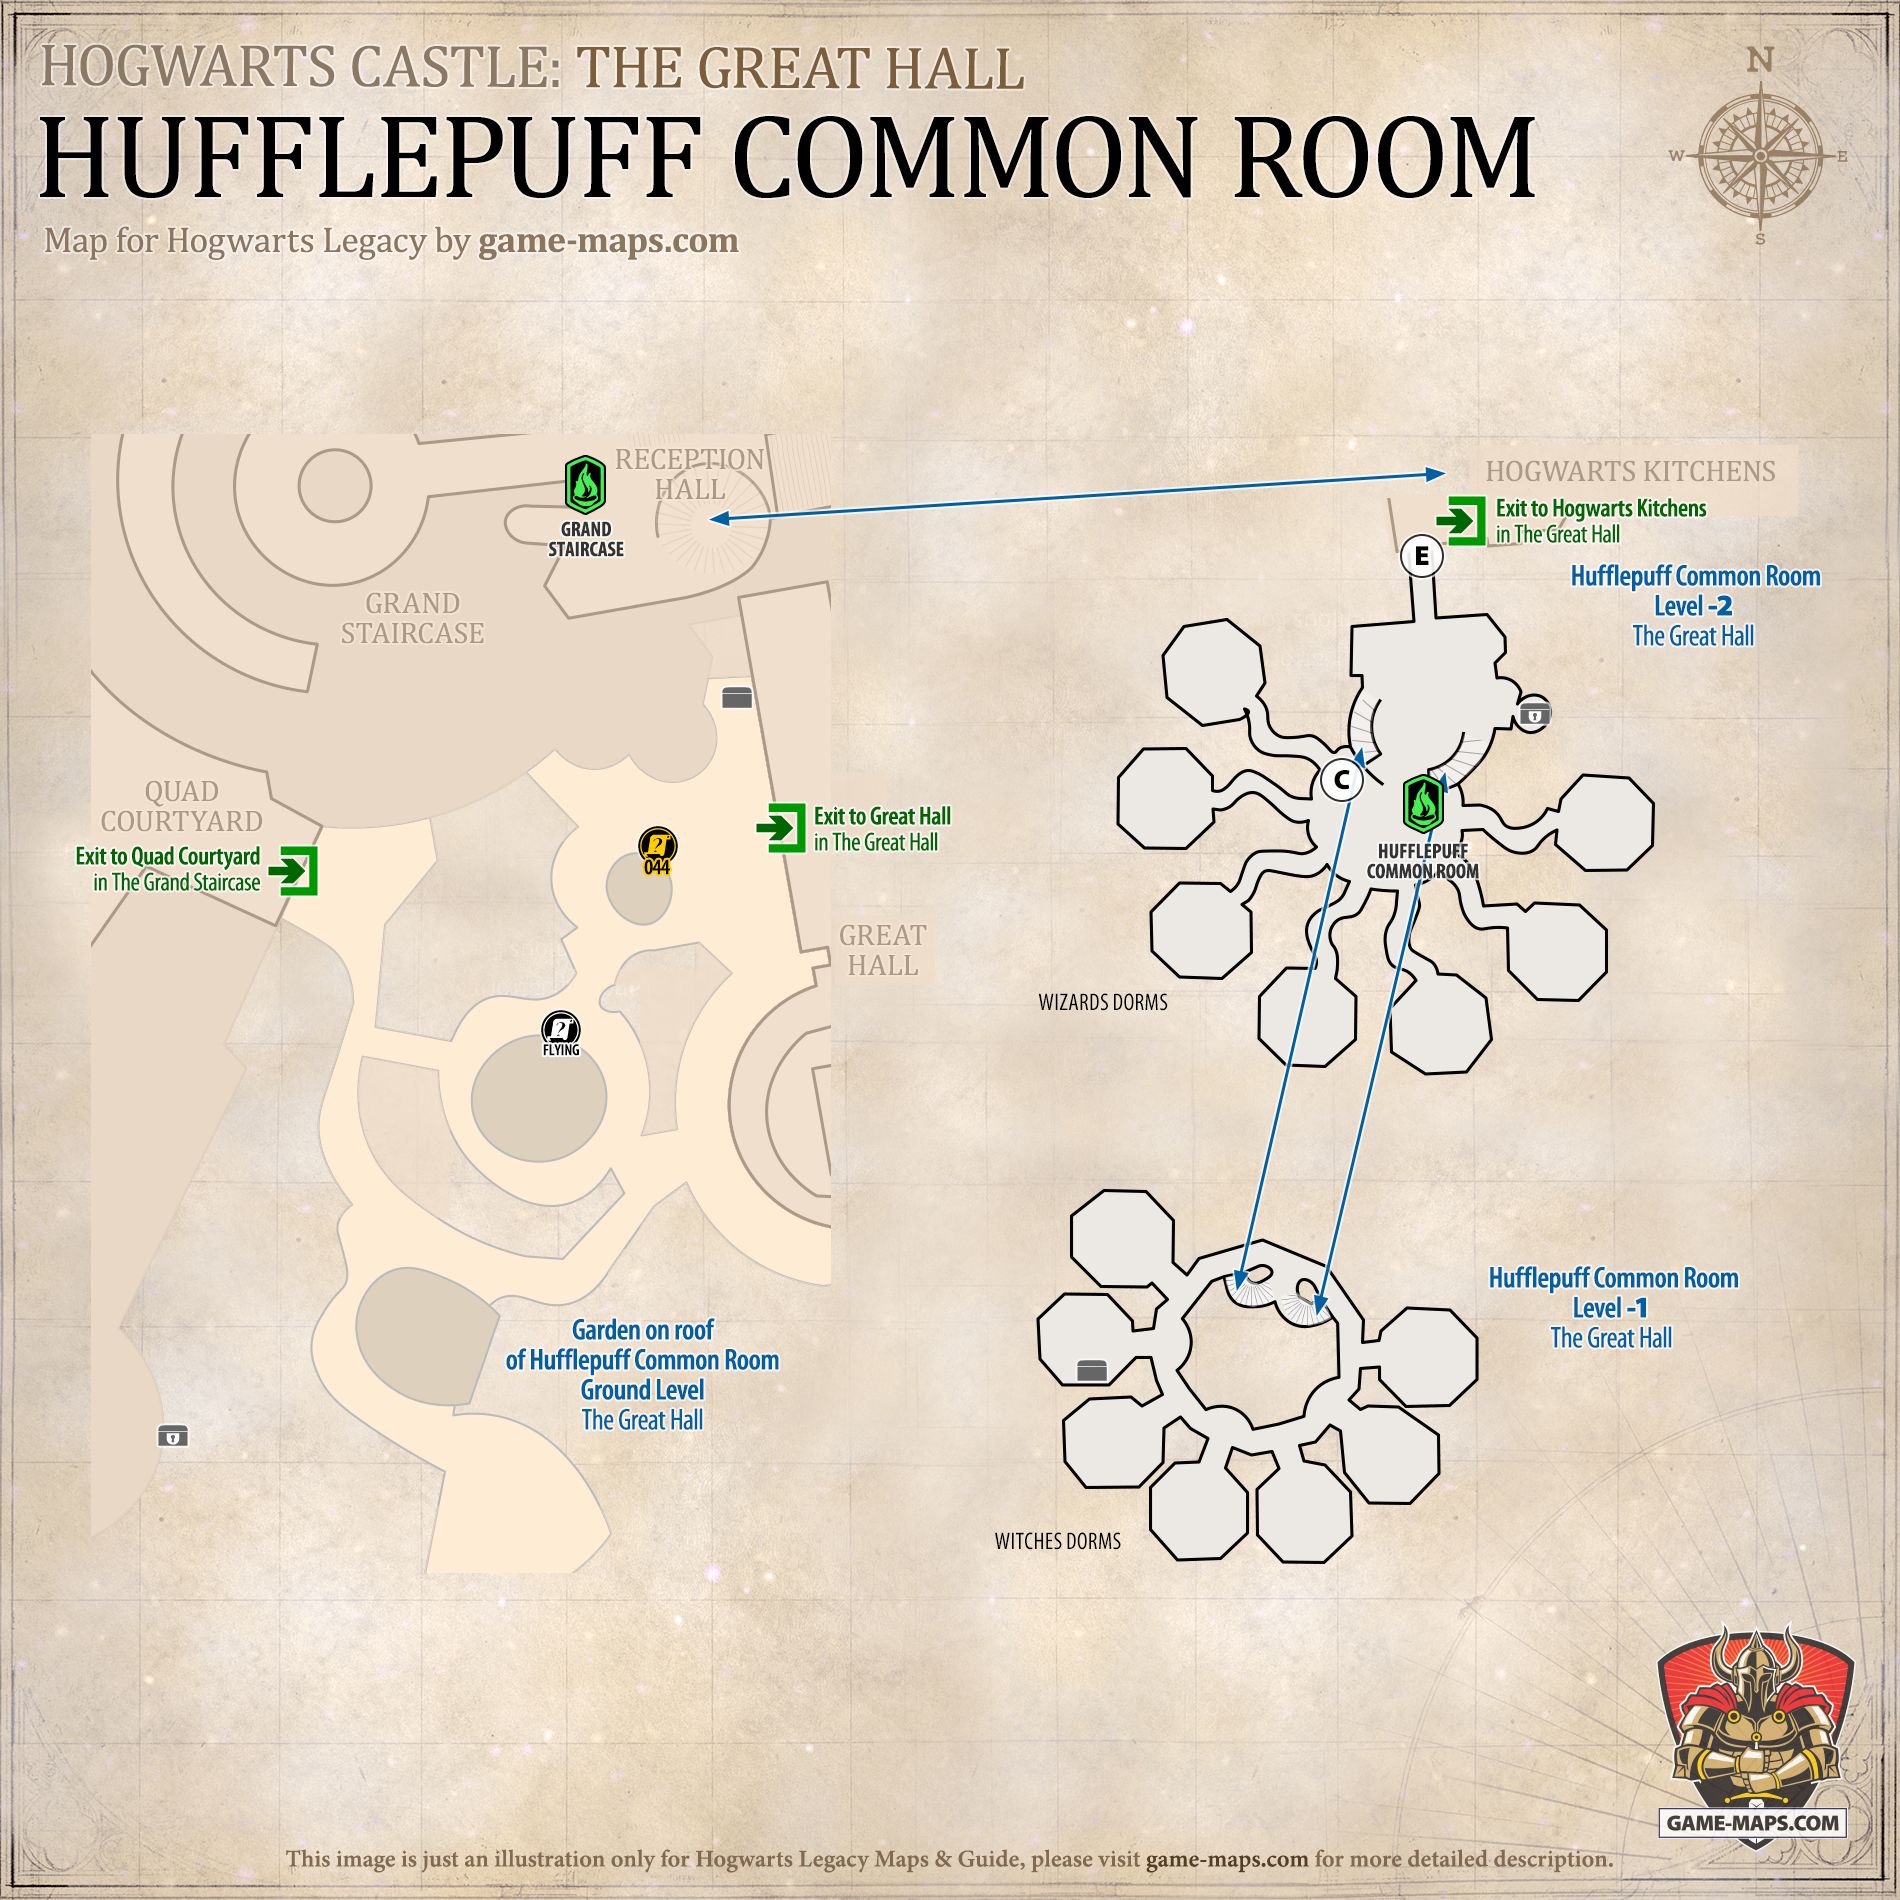 Hufflepuff Common Room Roxfort örökség